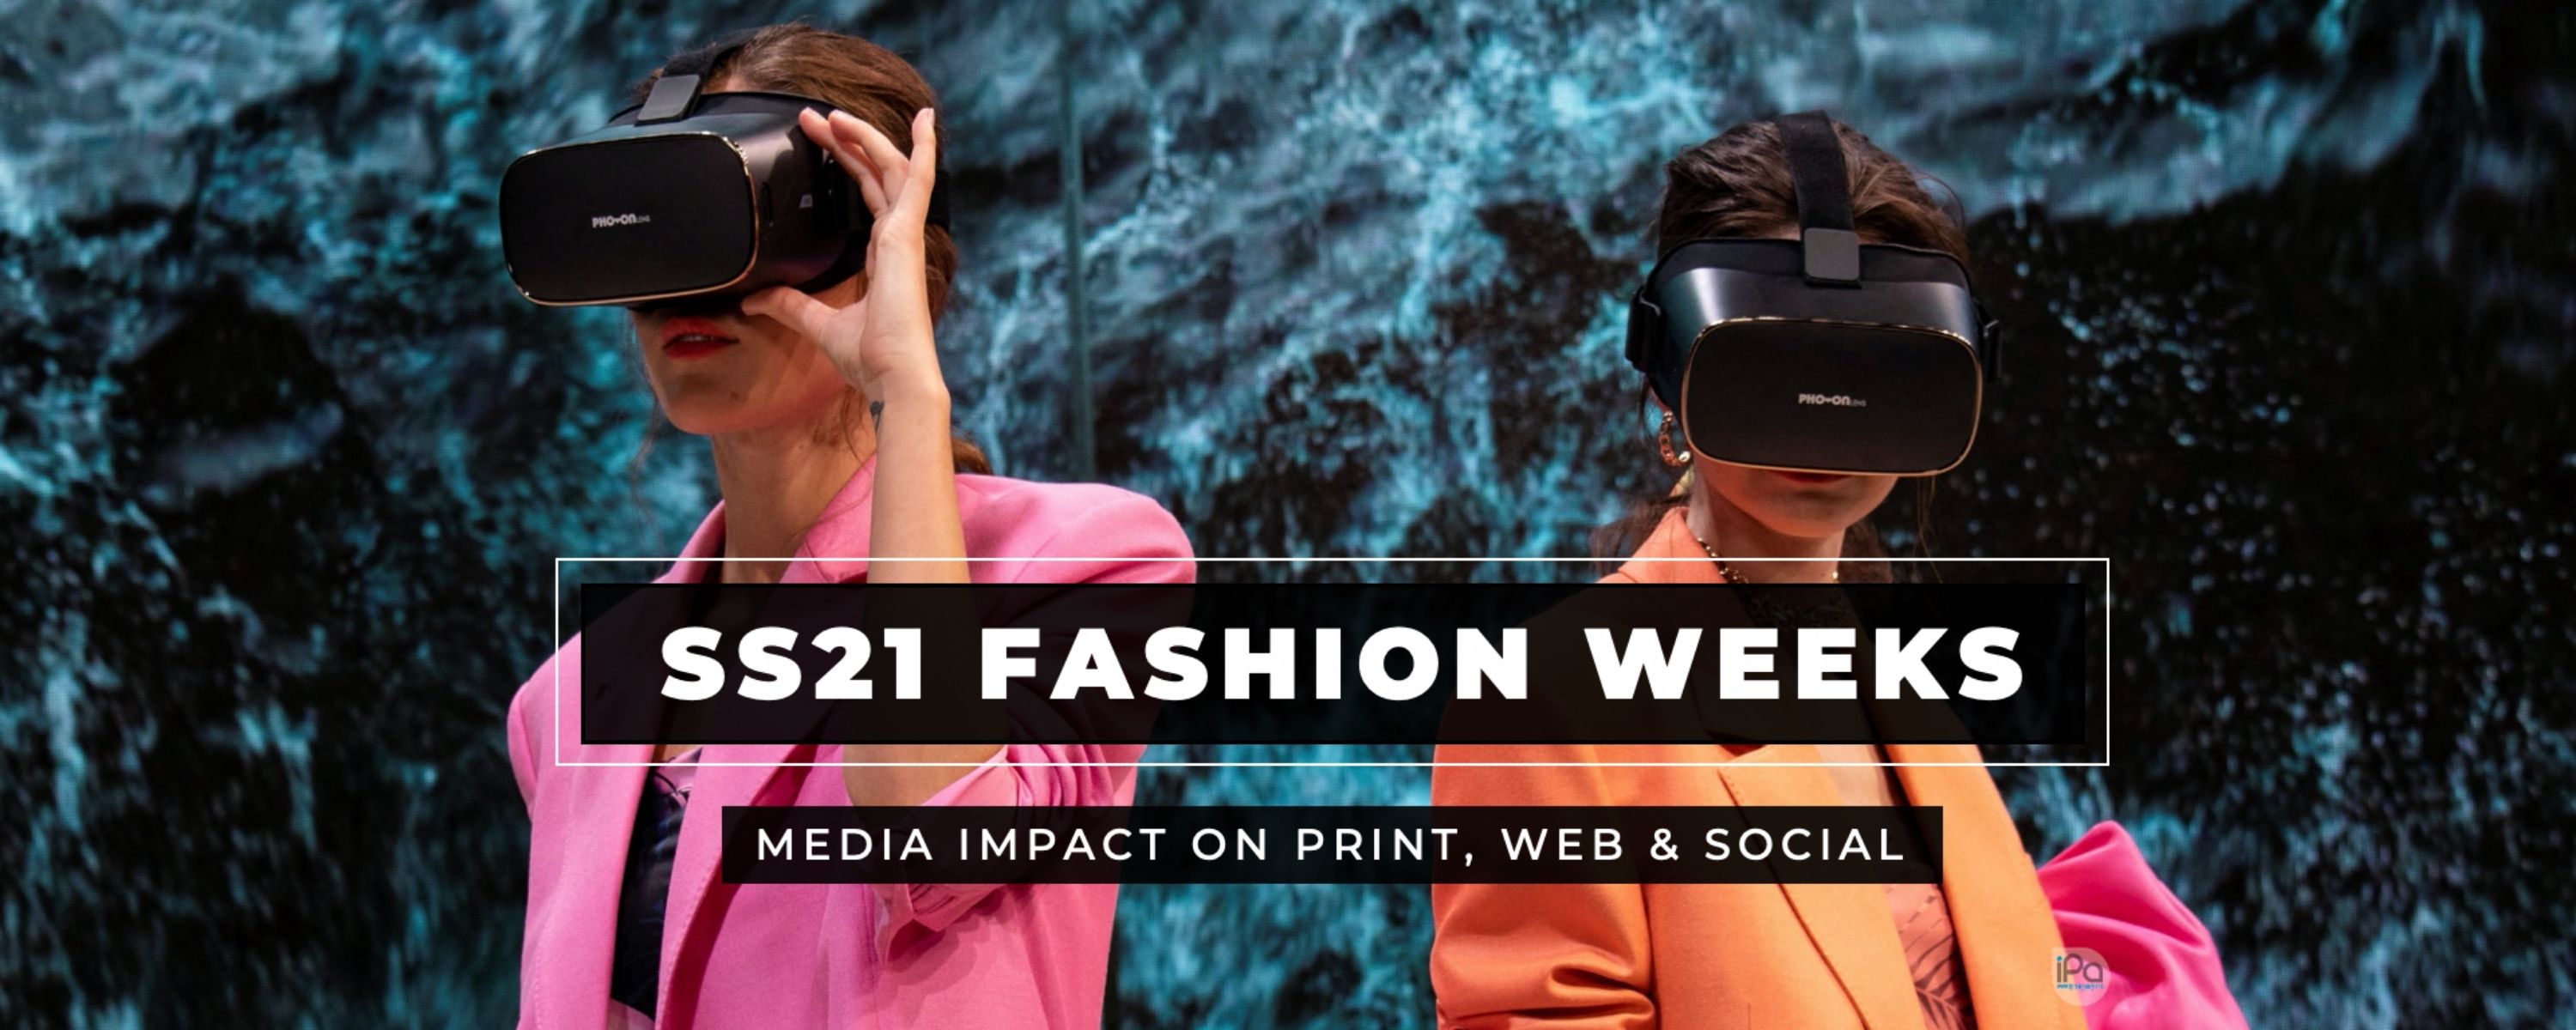 ss21 fashion weeks